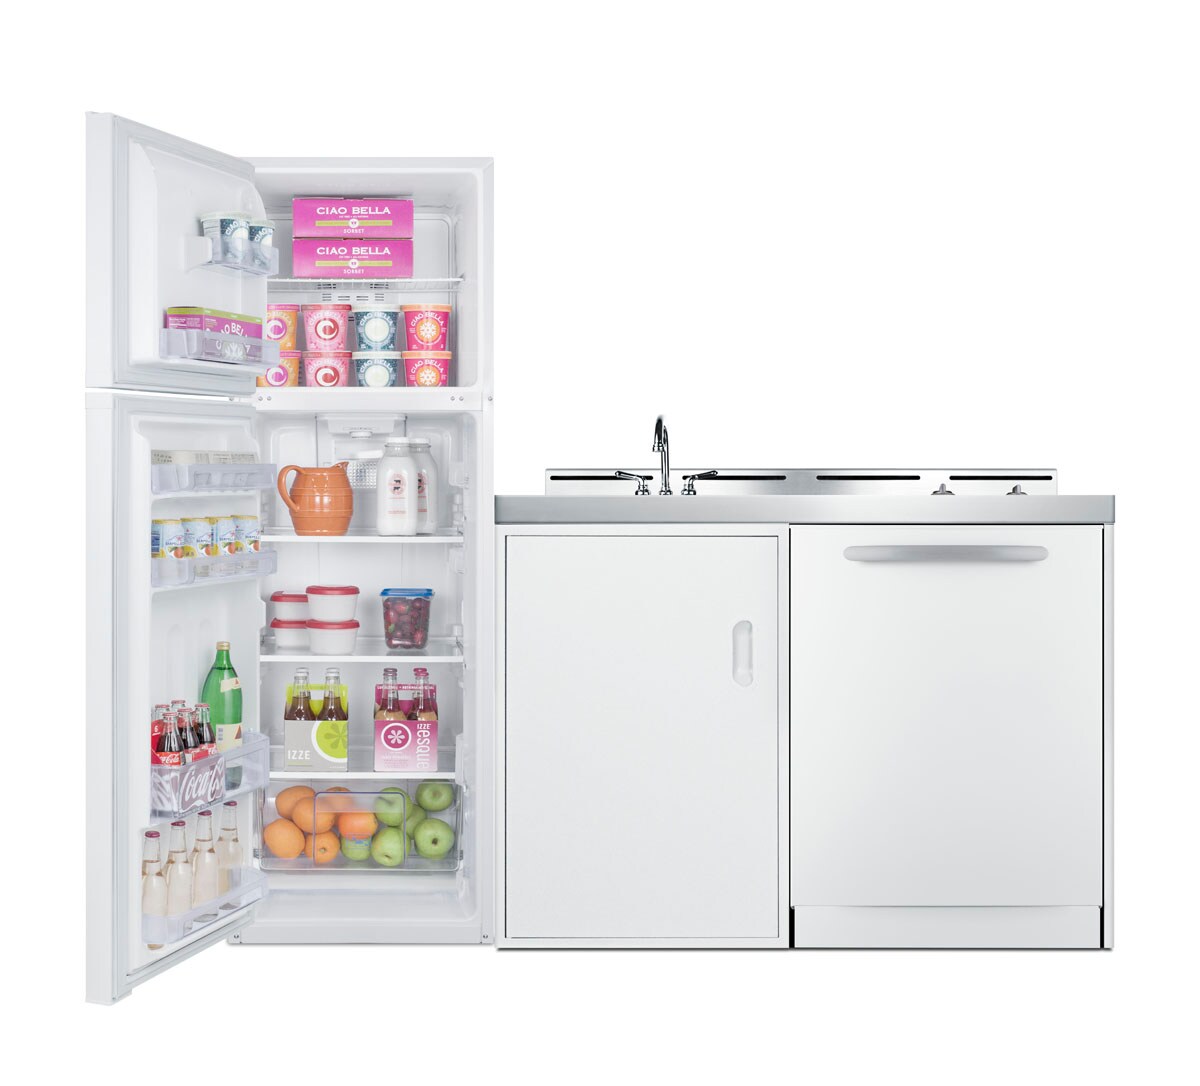 Summit FF946W Top Freezer Refrigerator - 8.8 cu ft - White